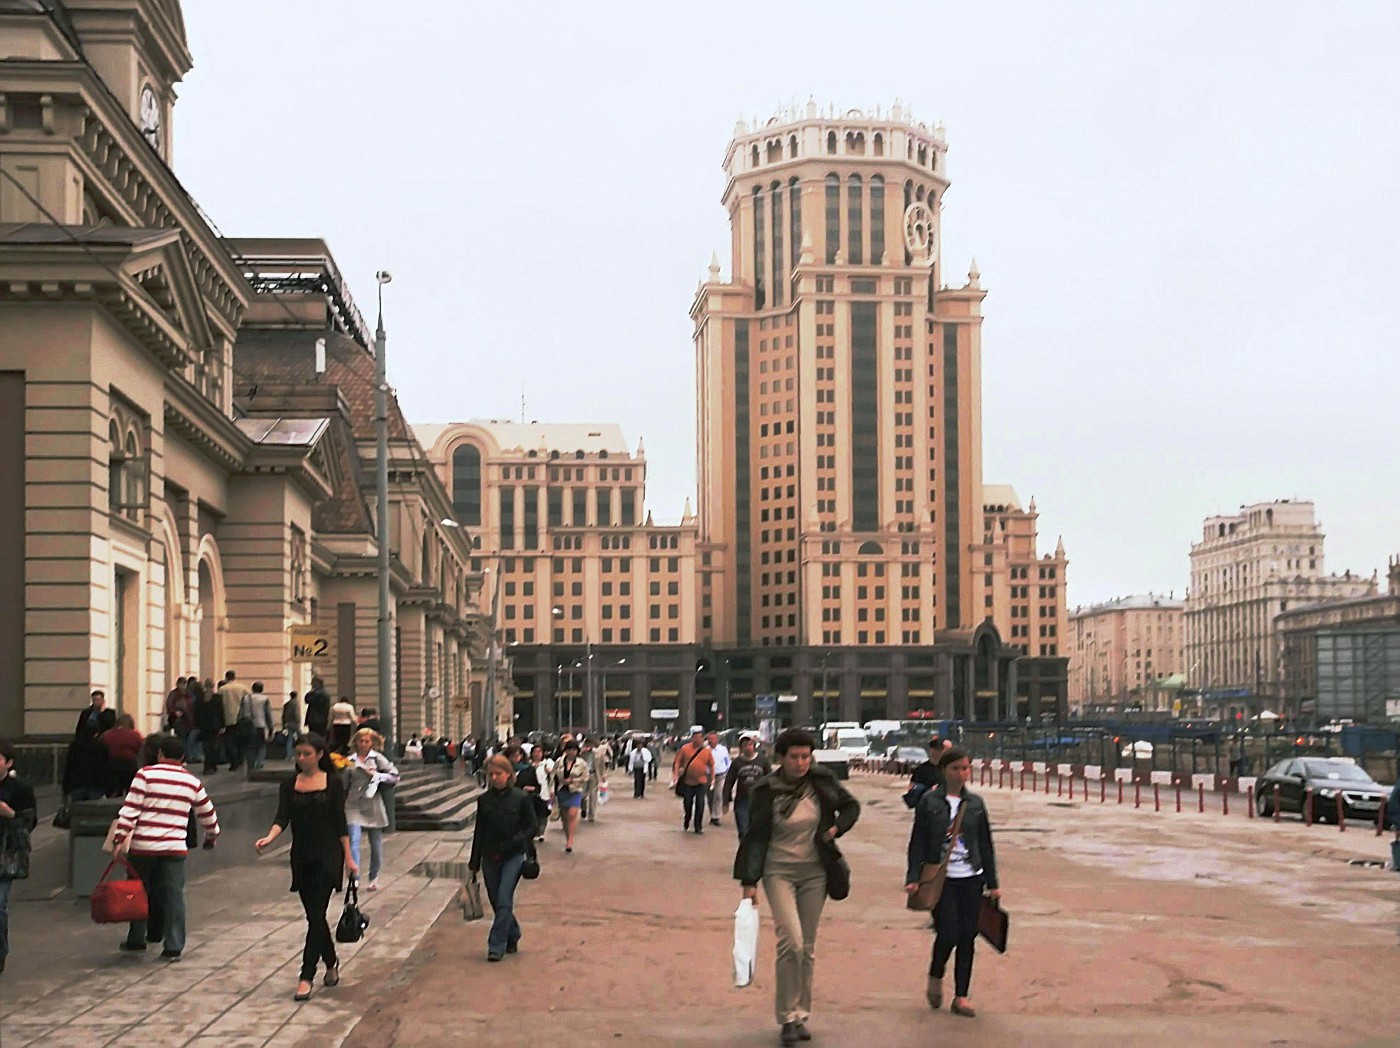 Moscow - City walks